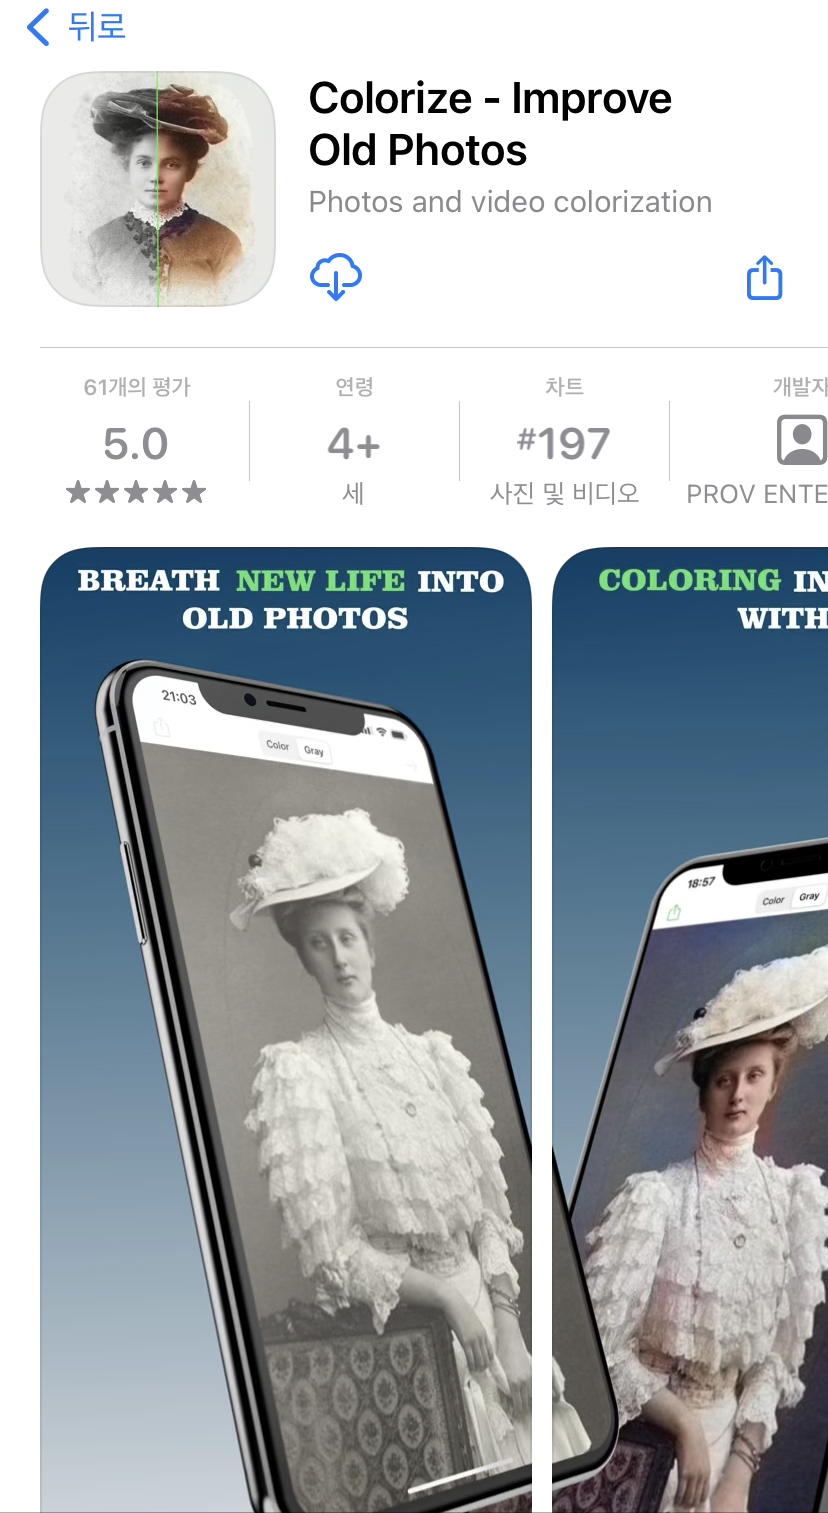 Colorize - Improve Old Photos 소개사진